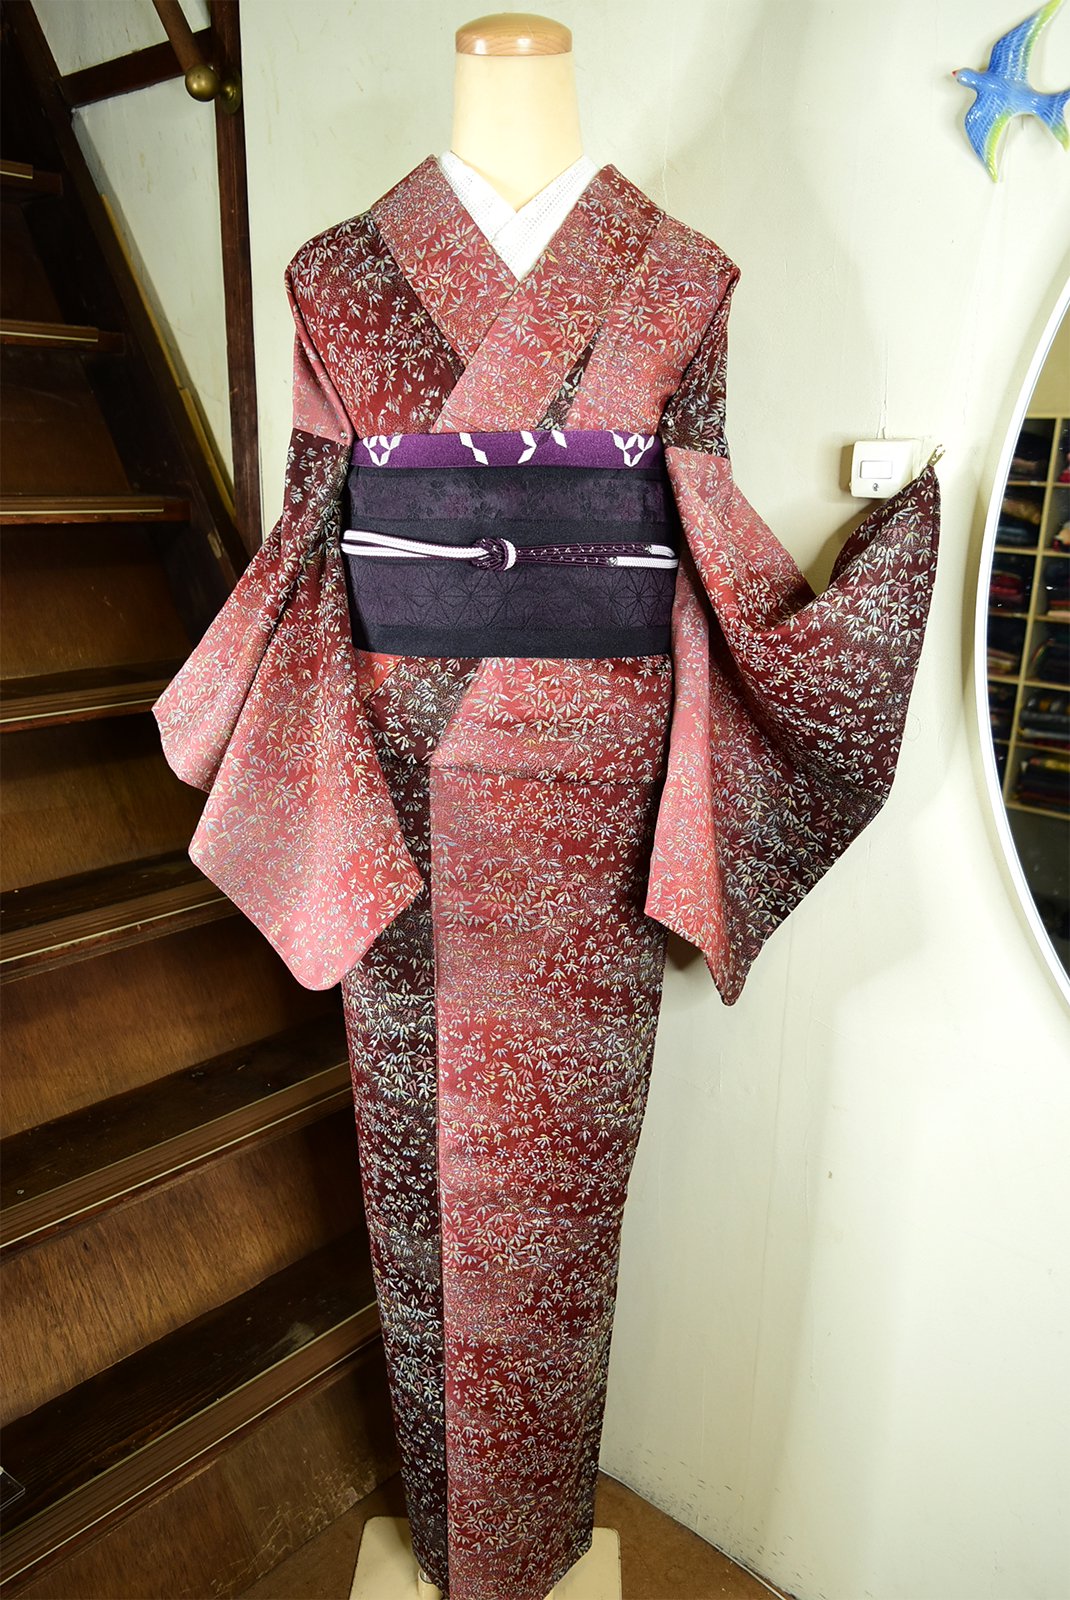 Subtle Luxury - Luxury Robes and Kimonos